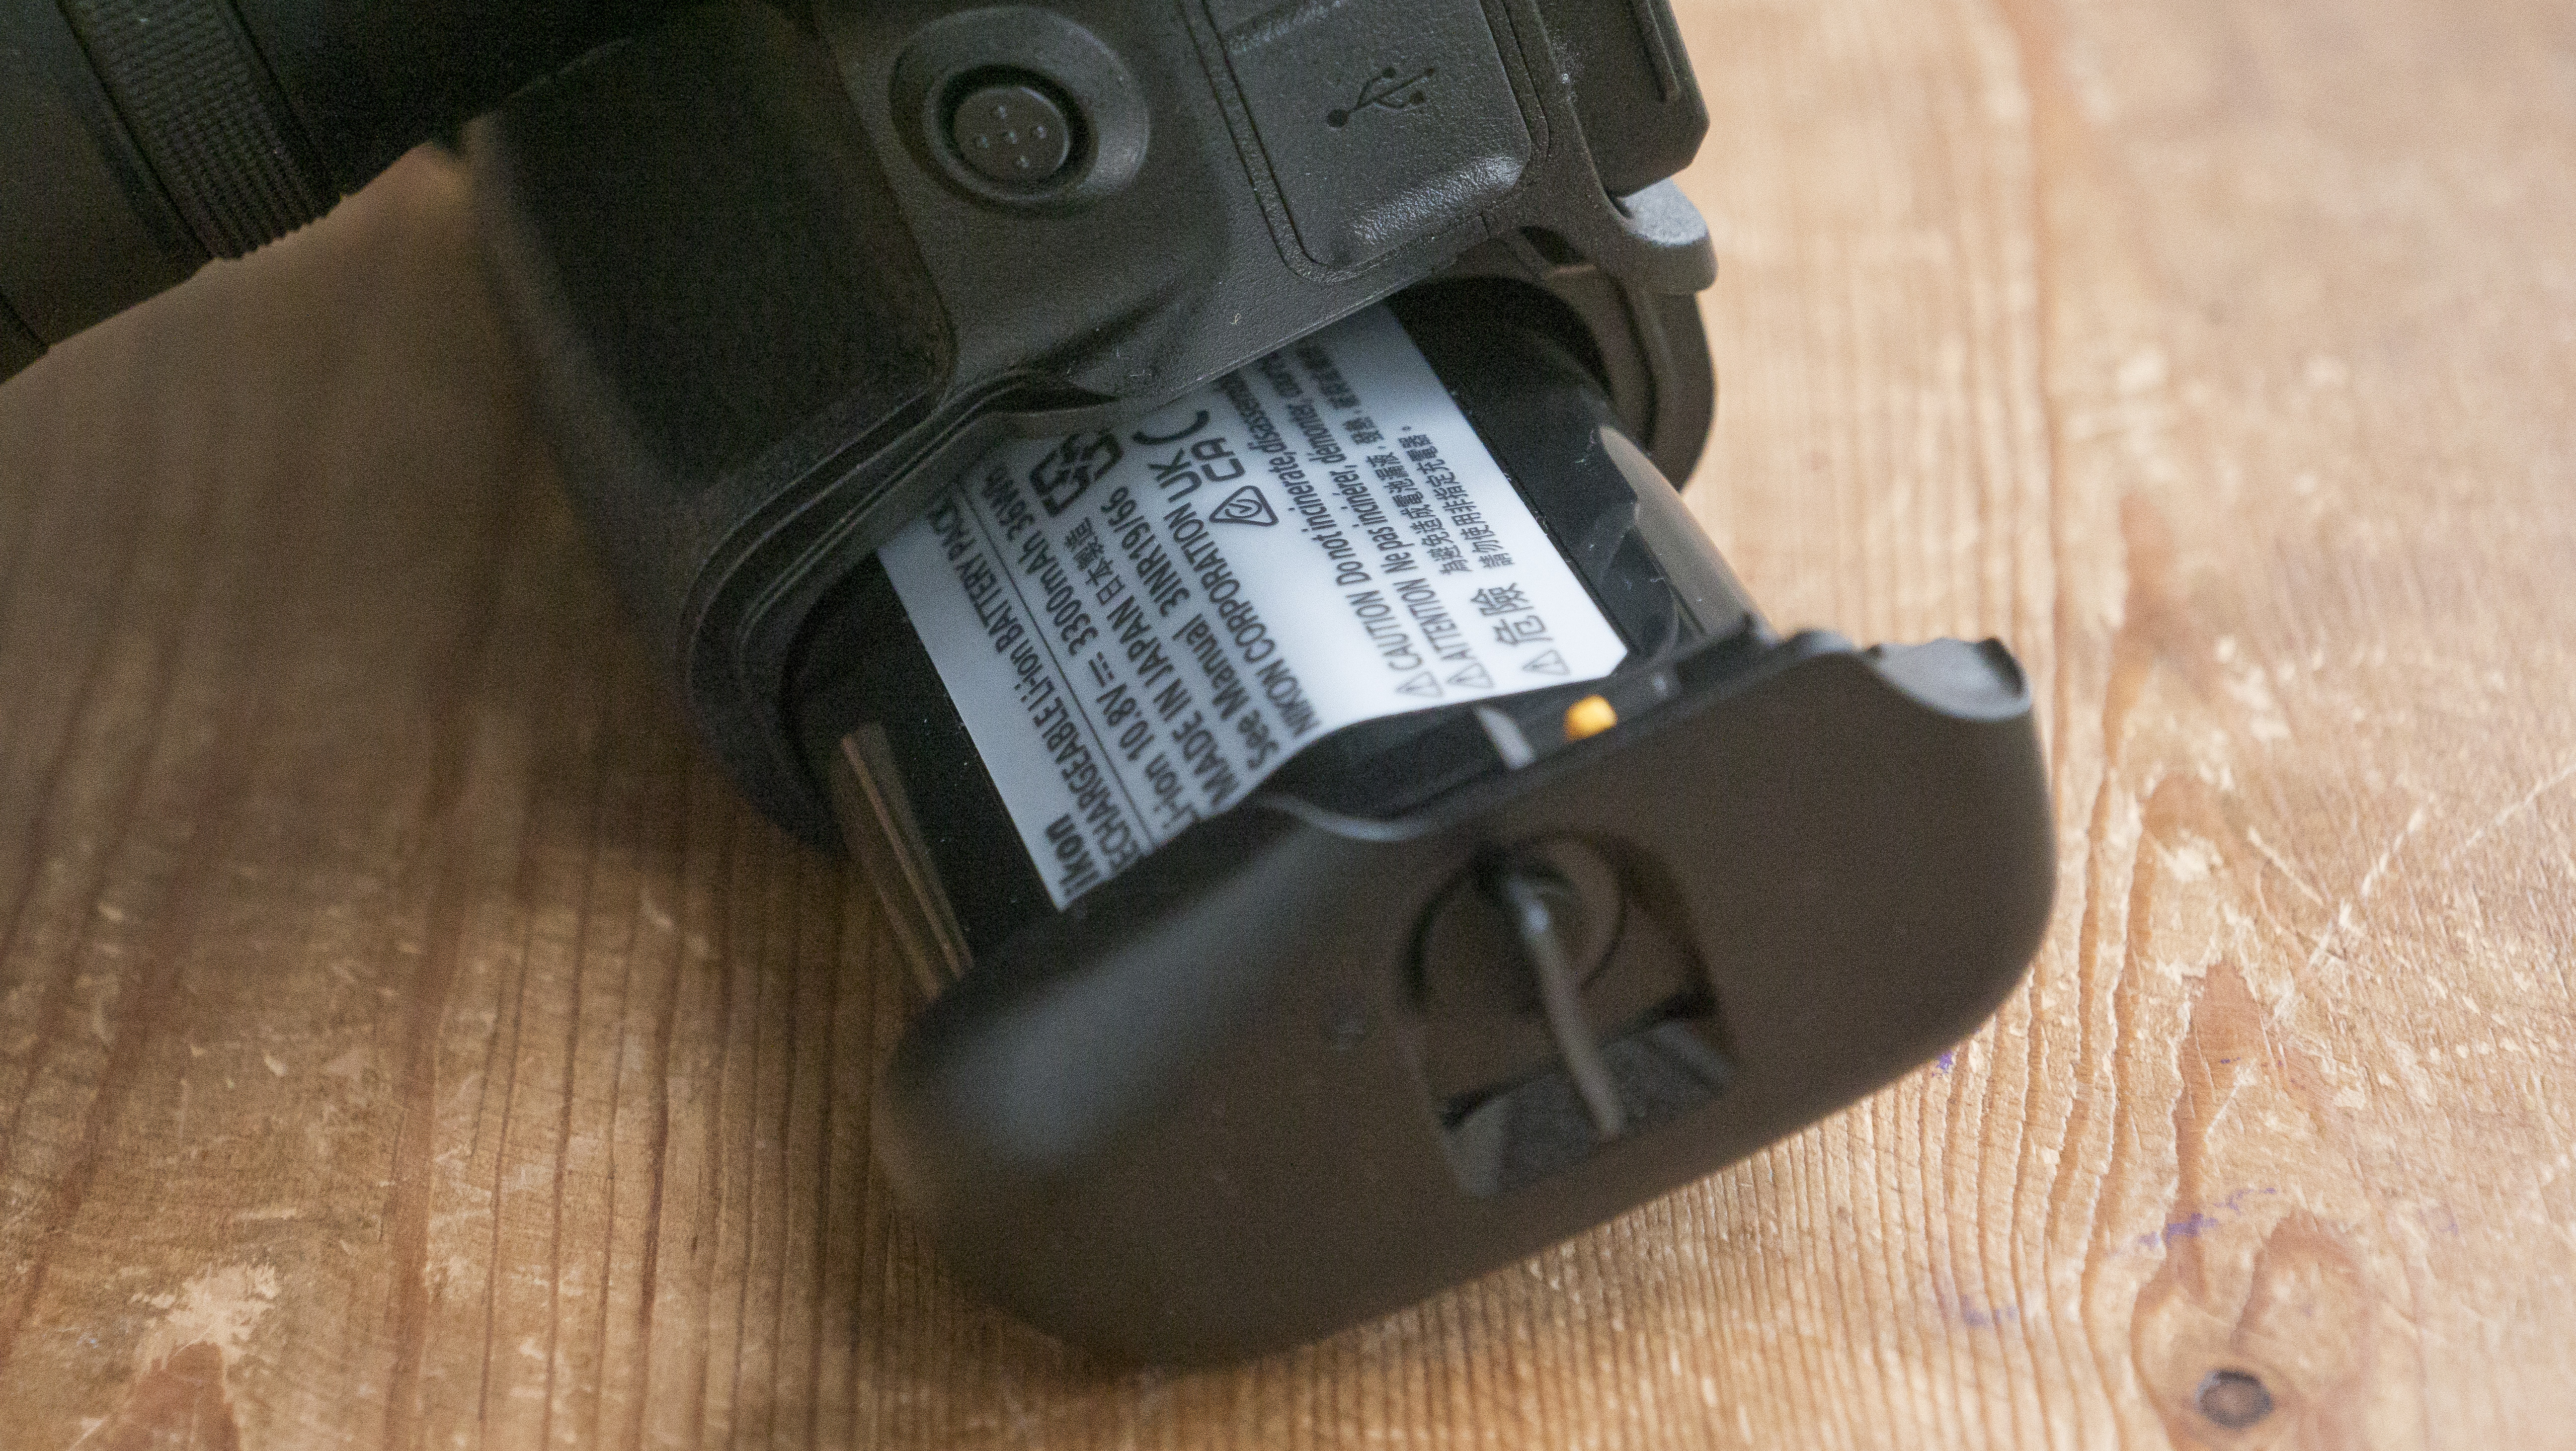 The Nikon Z9 camera's battery